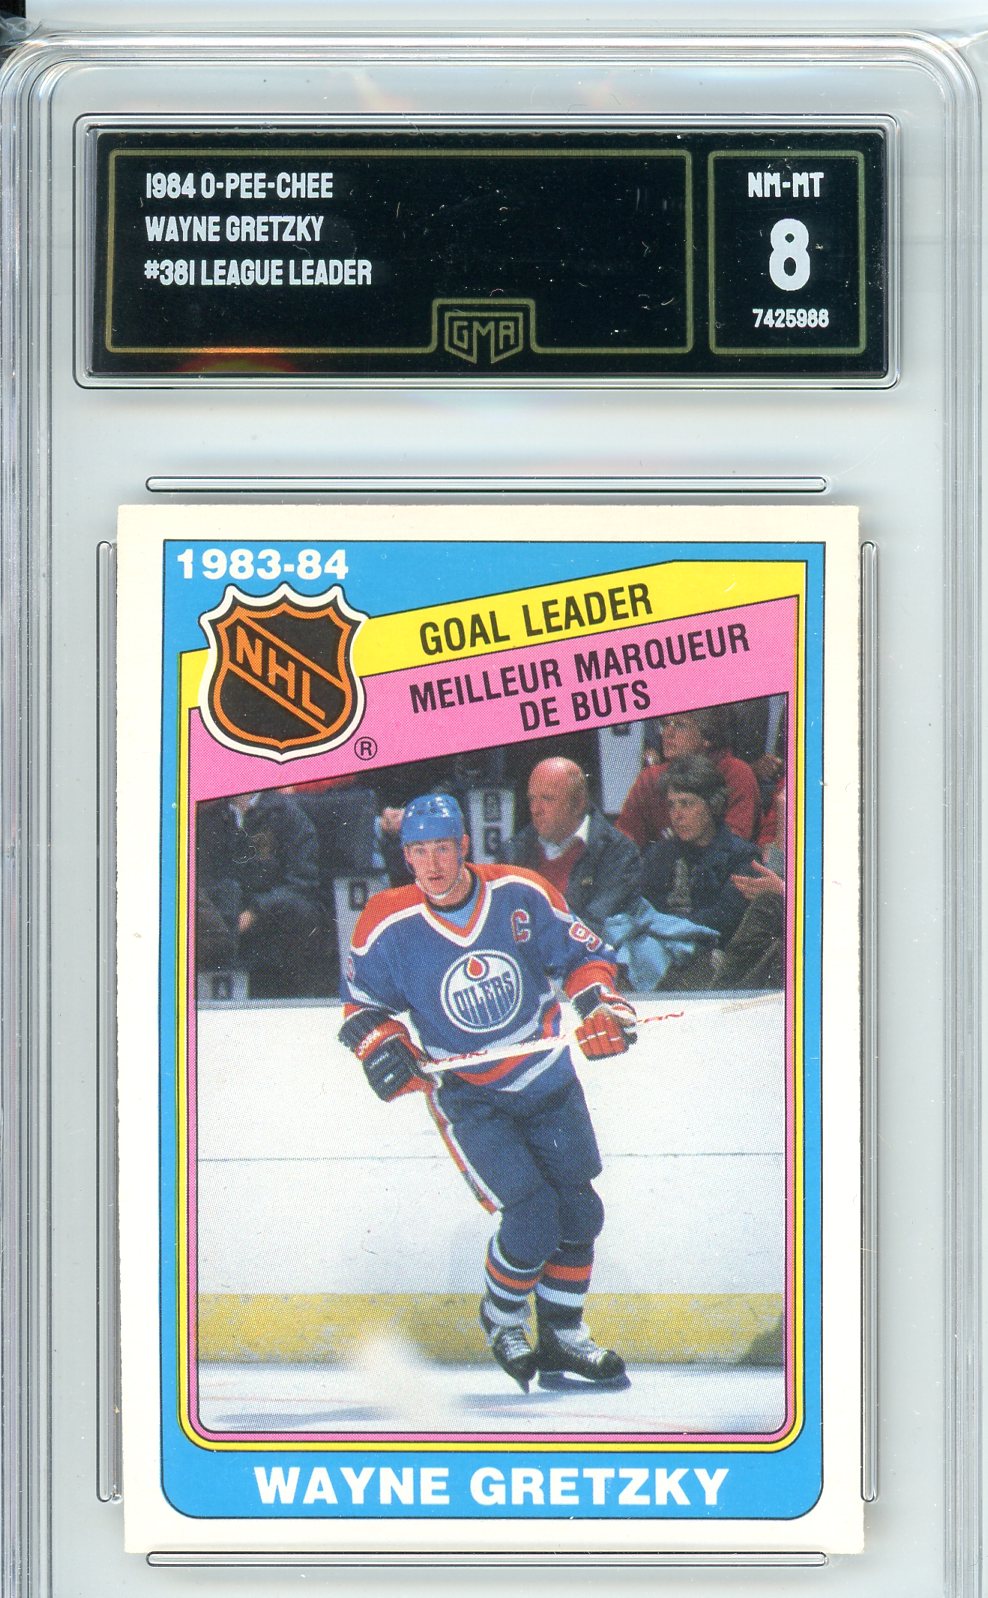 1984 OPC Wayne Gretzky #381 League Leader Card GMA 8